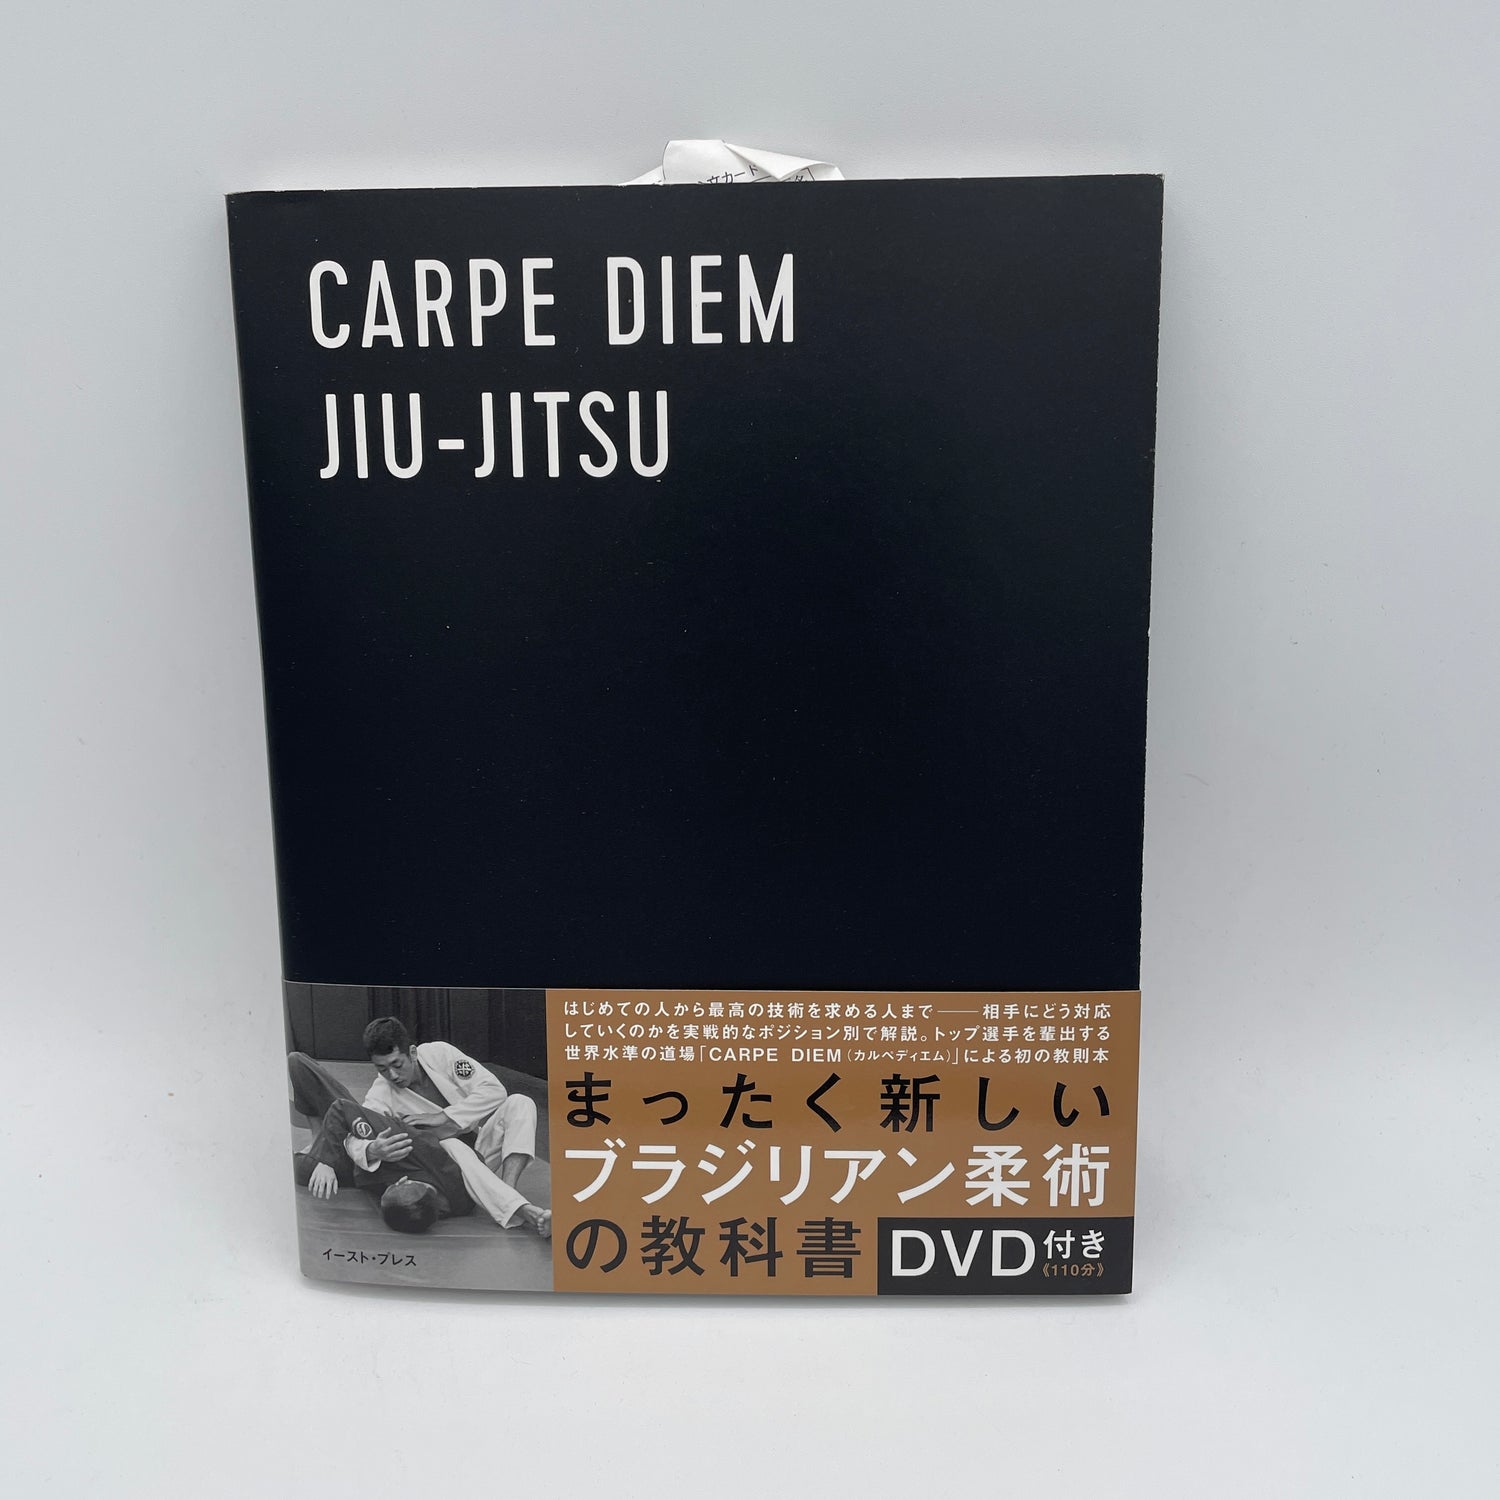 Carpe Diem Jiu-Jitsu Book & DVD with Yuki Ishikawa